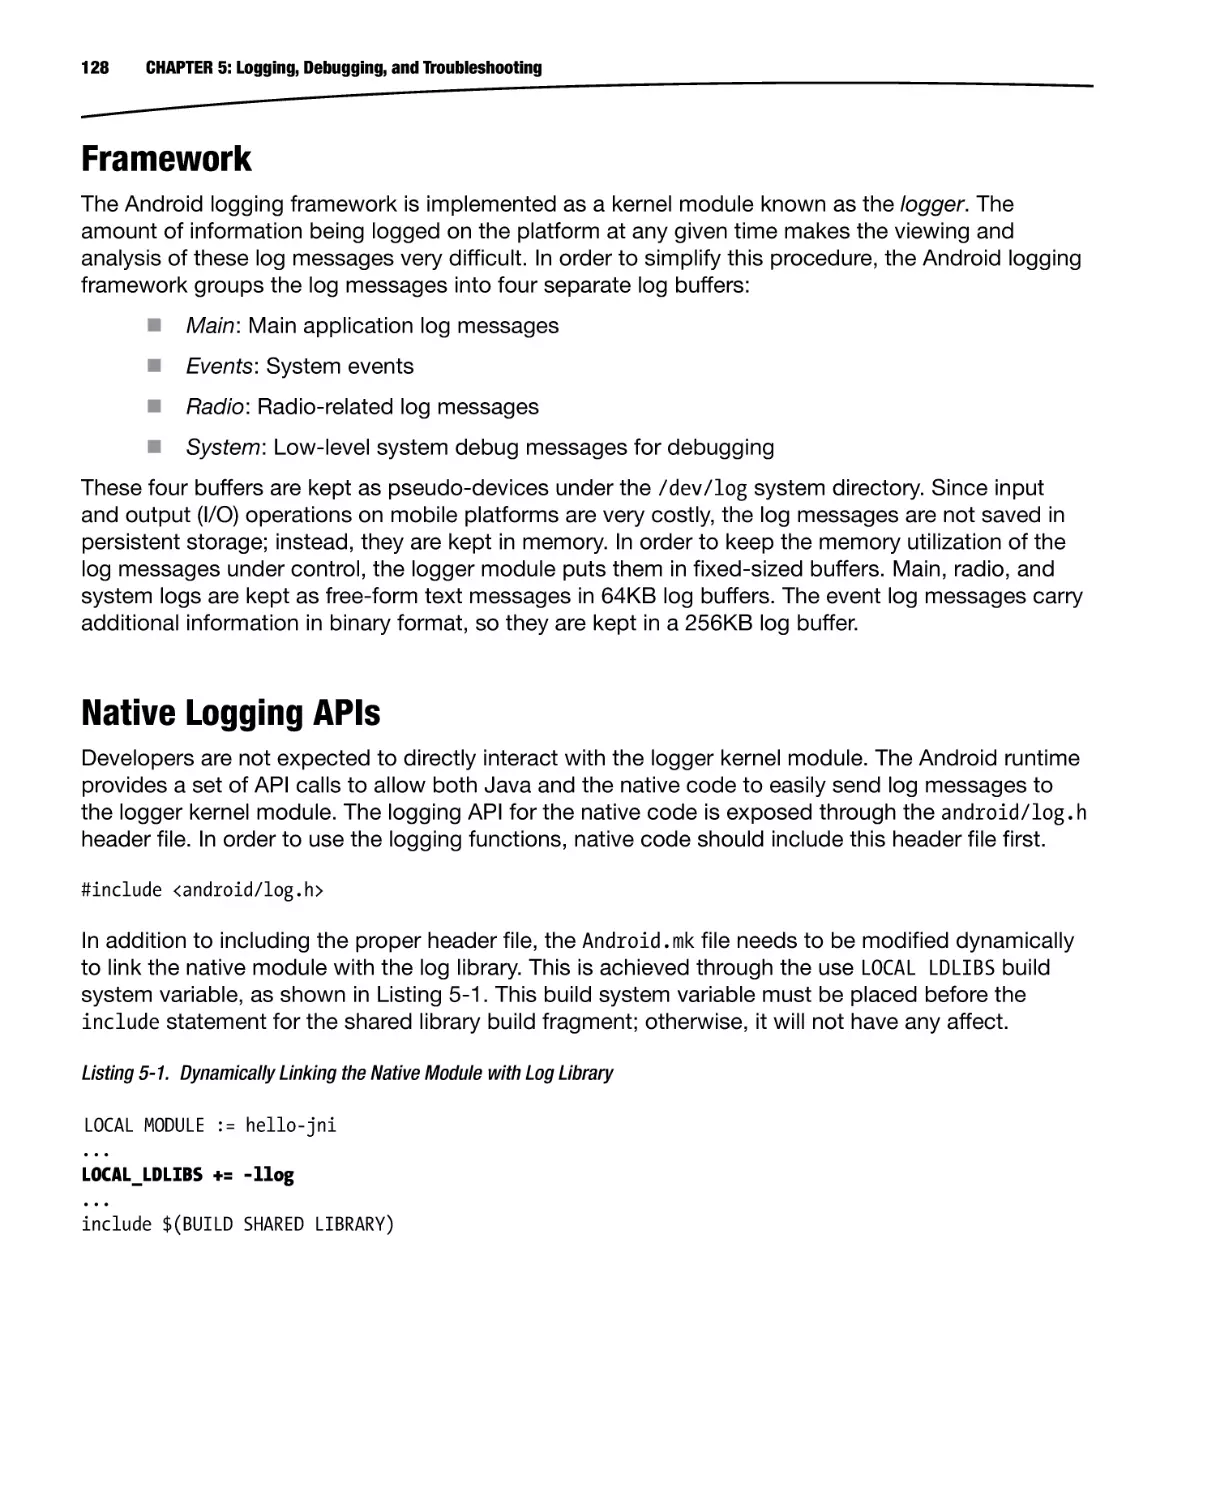 Framework
Native Logging APIs